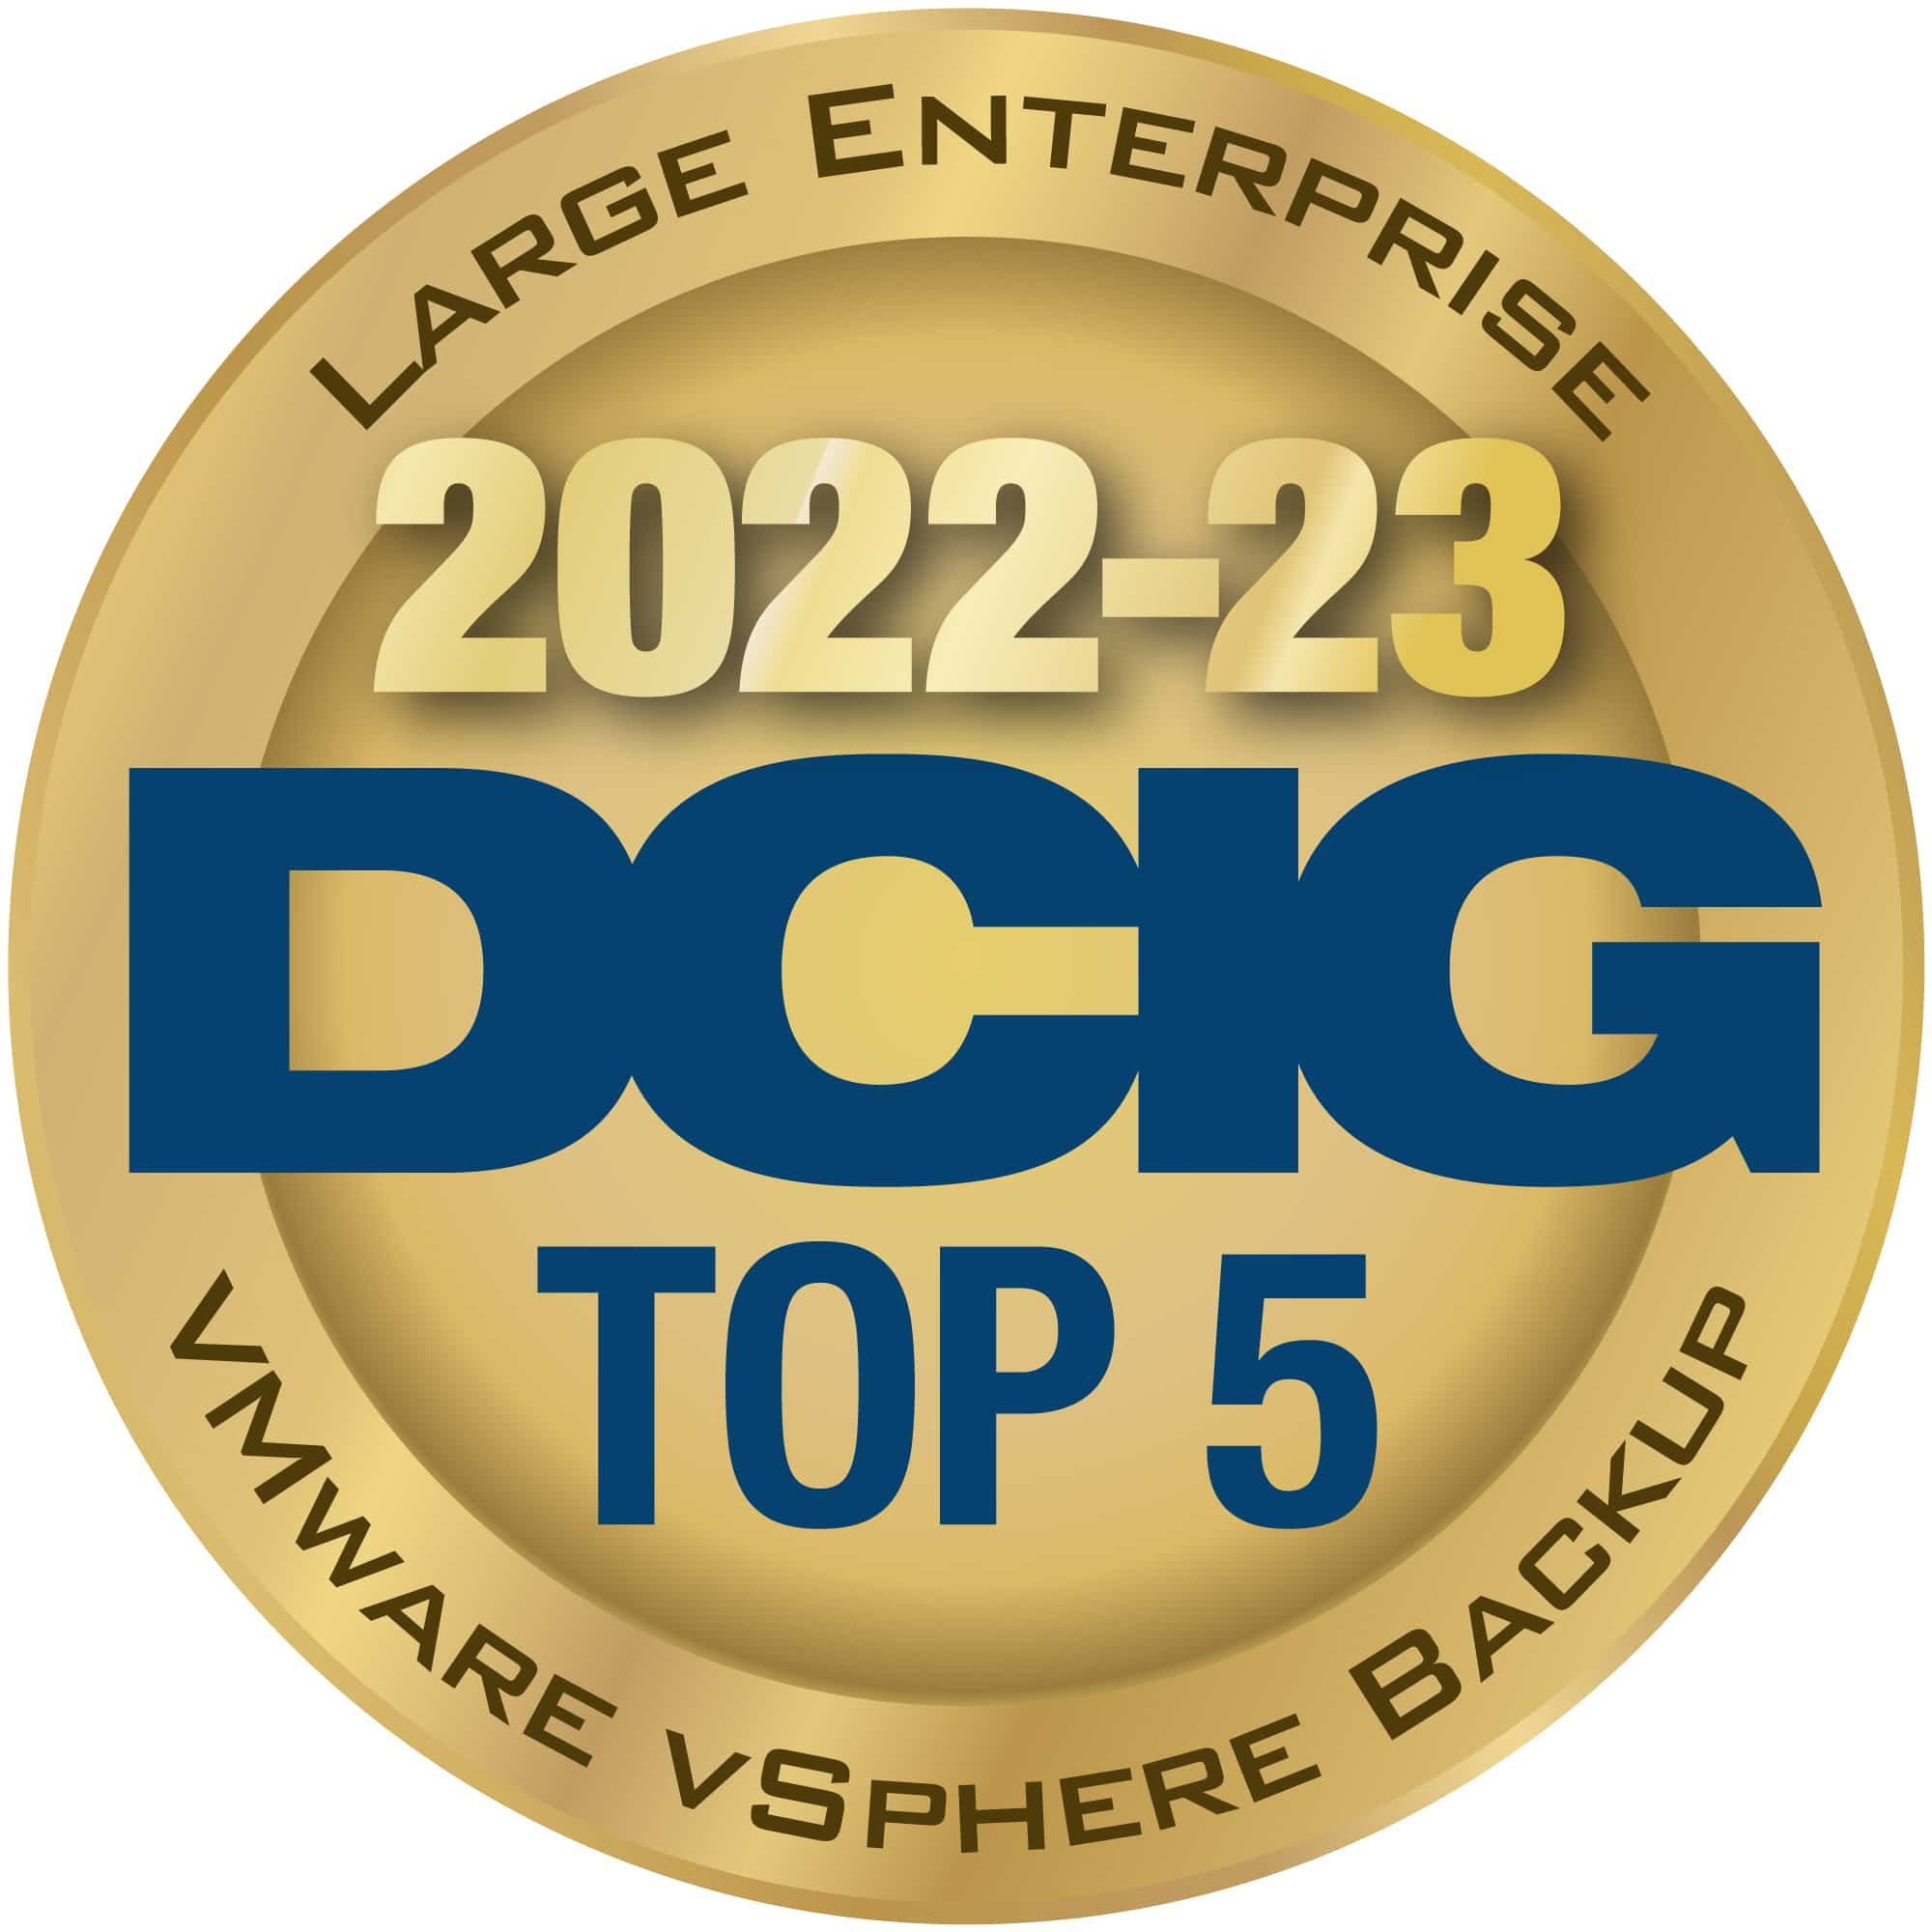 DCIG award